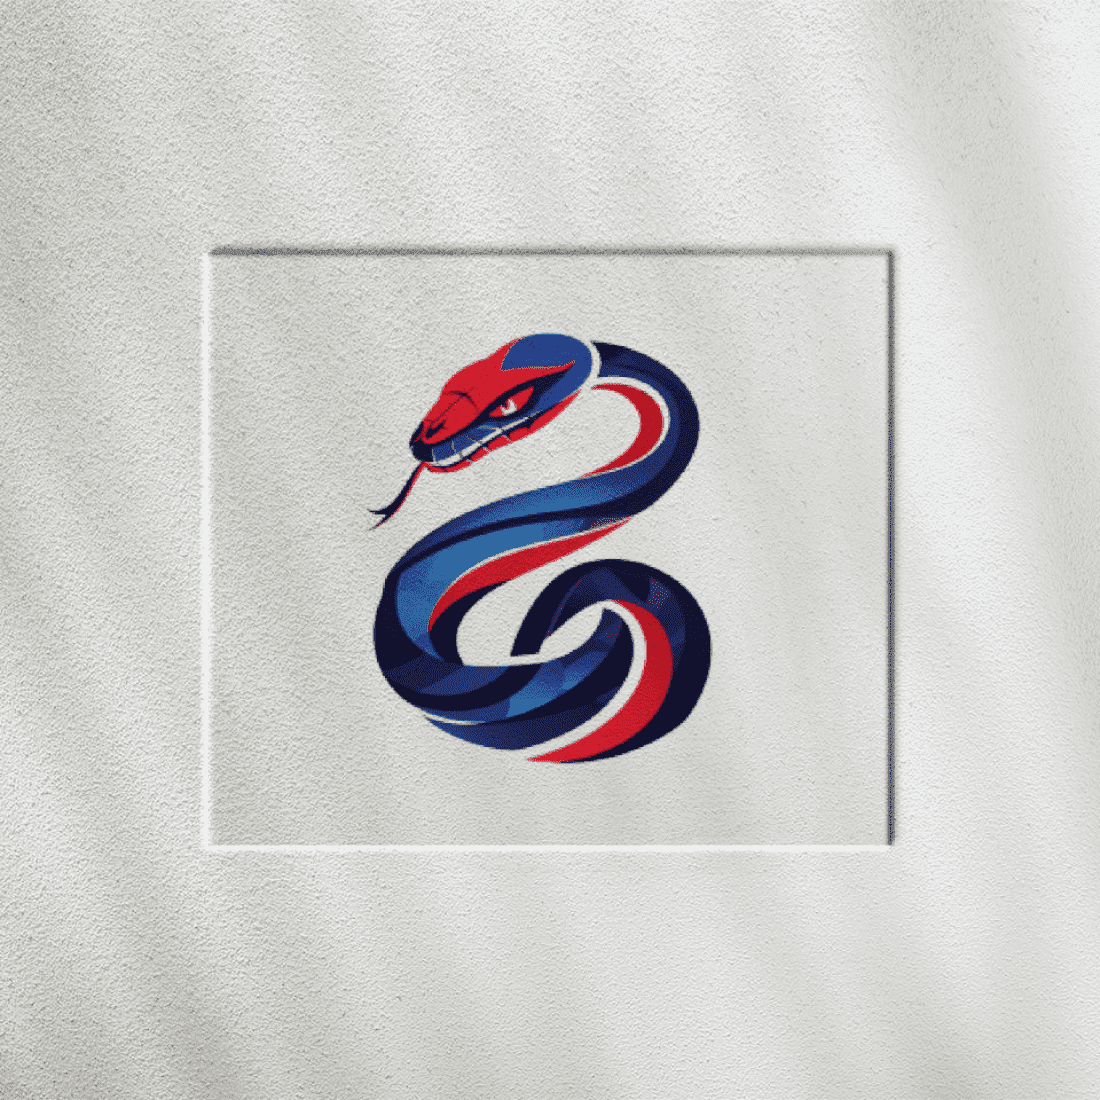 Snake Logo preview image.